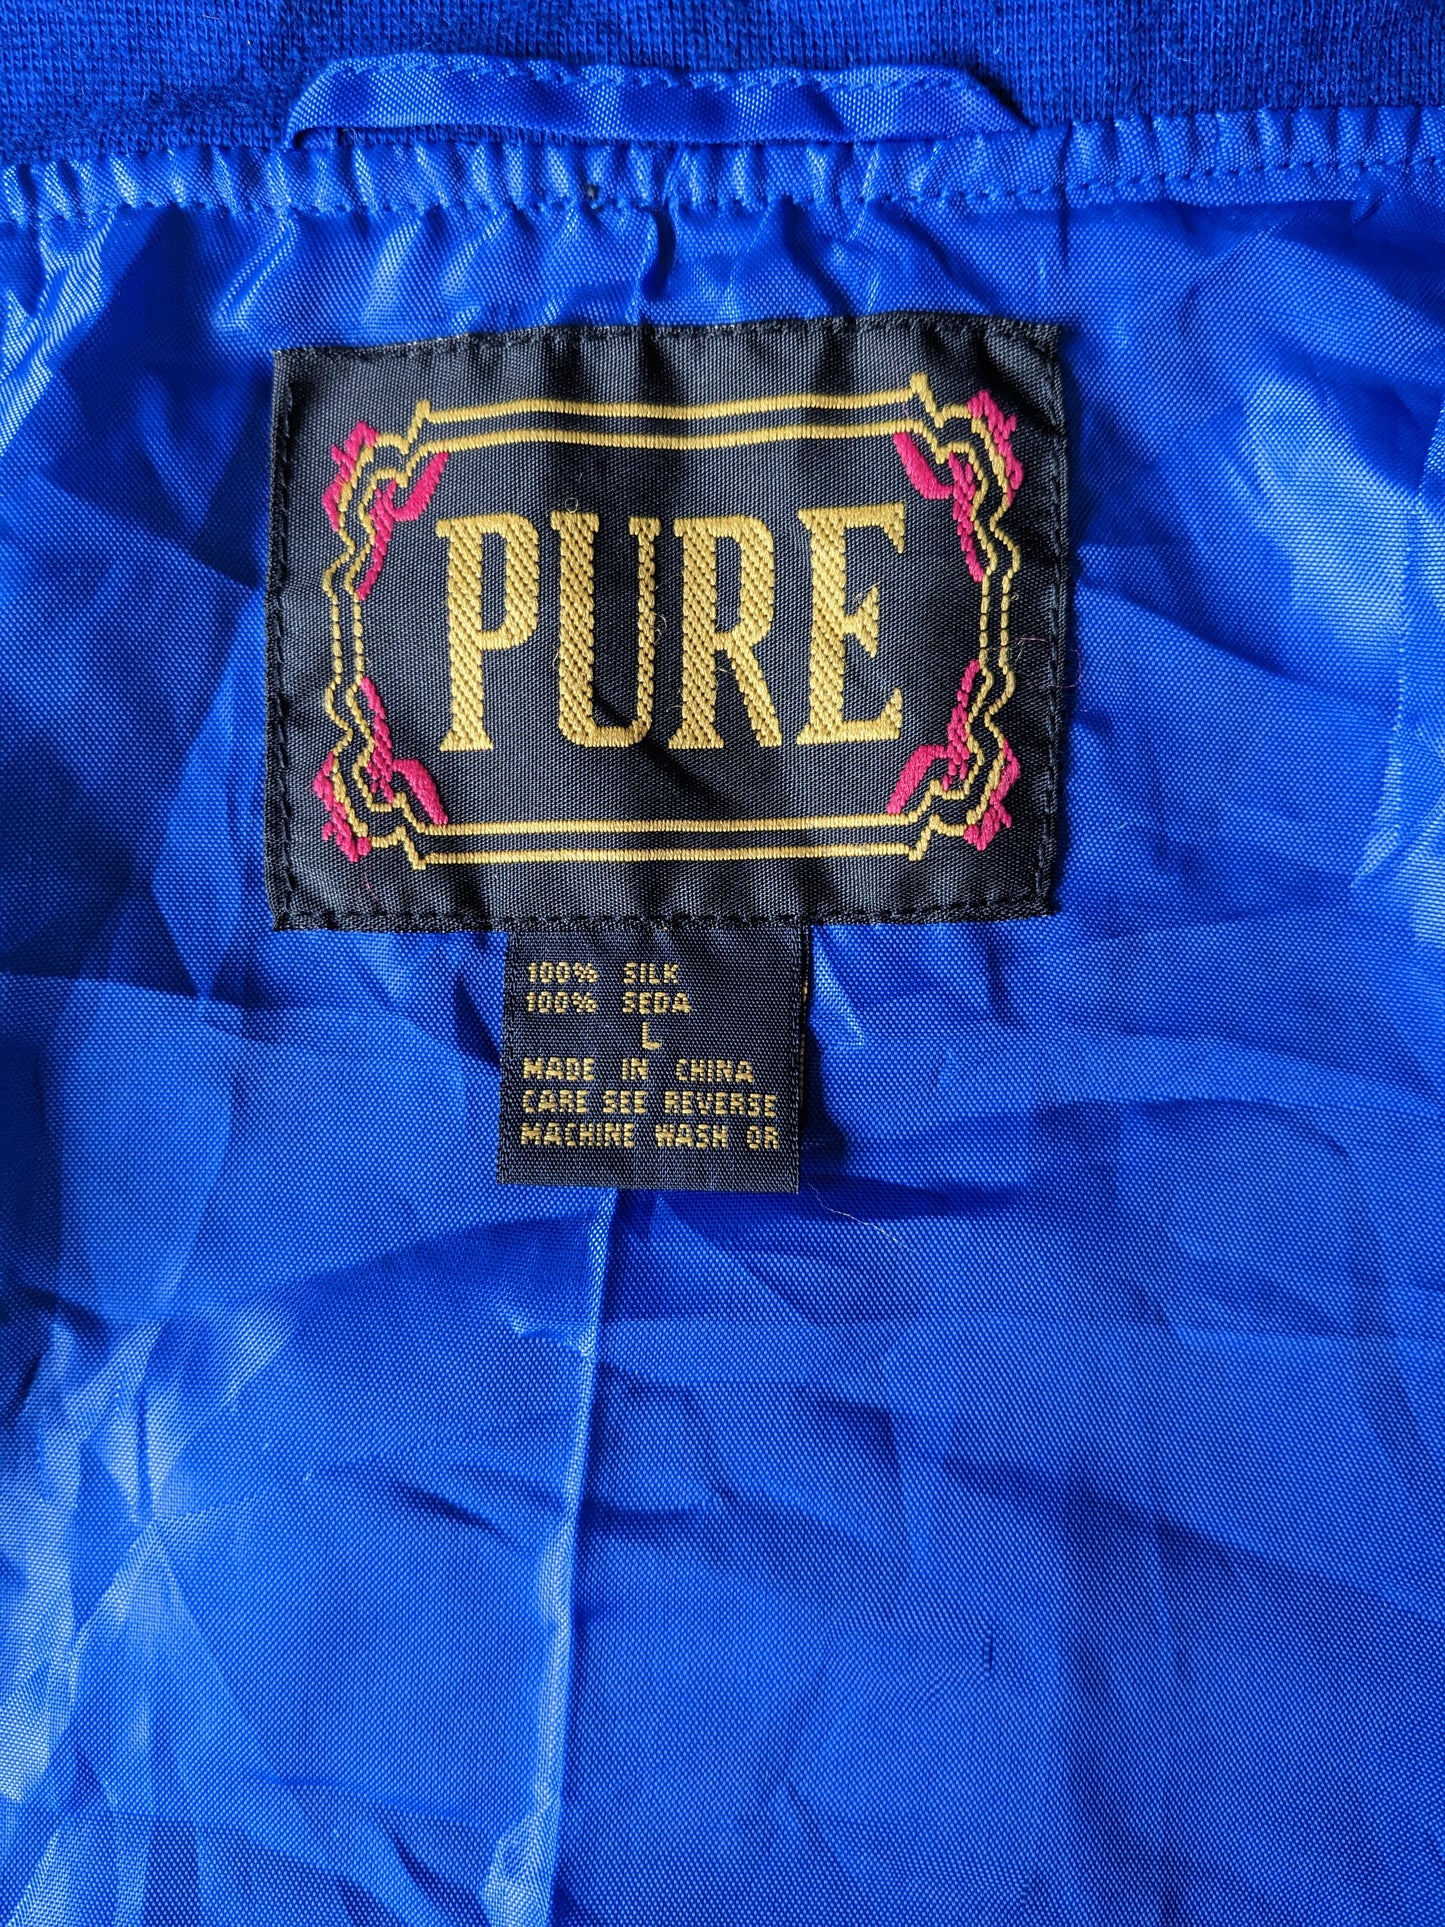 Vintage 80-90S Silk Pure Jack. "Laughlin Nevada". Color azul. Tamaño L / XL.